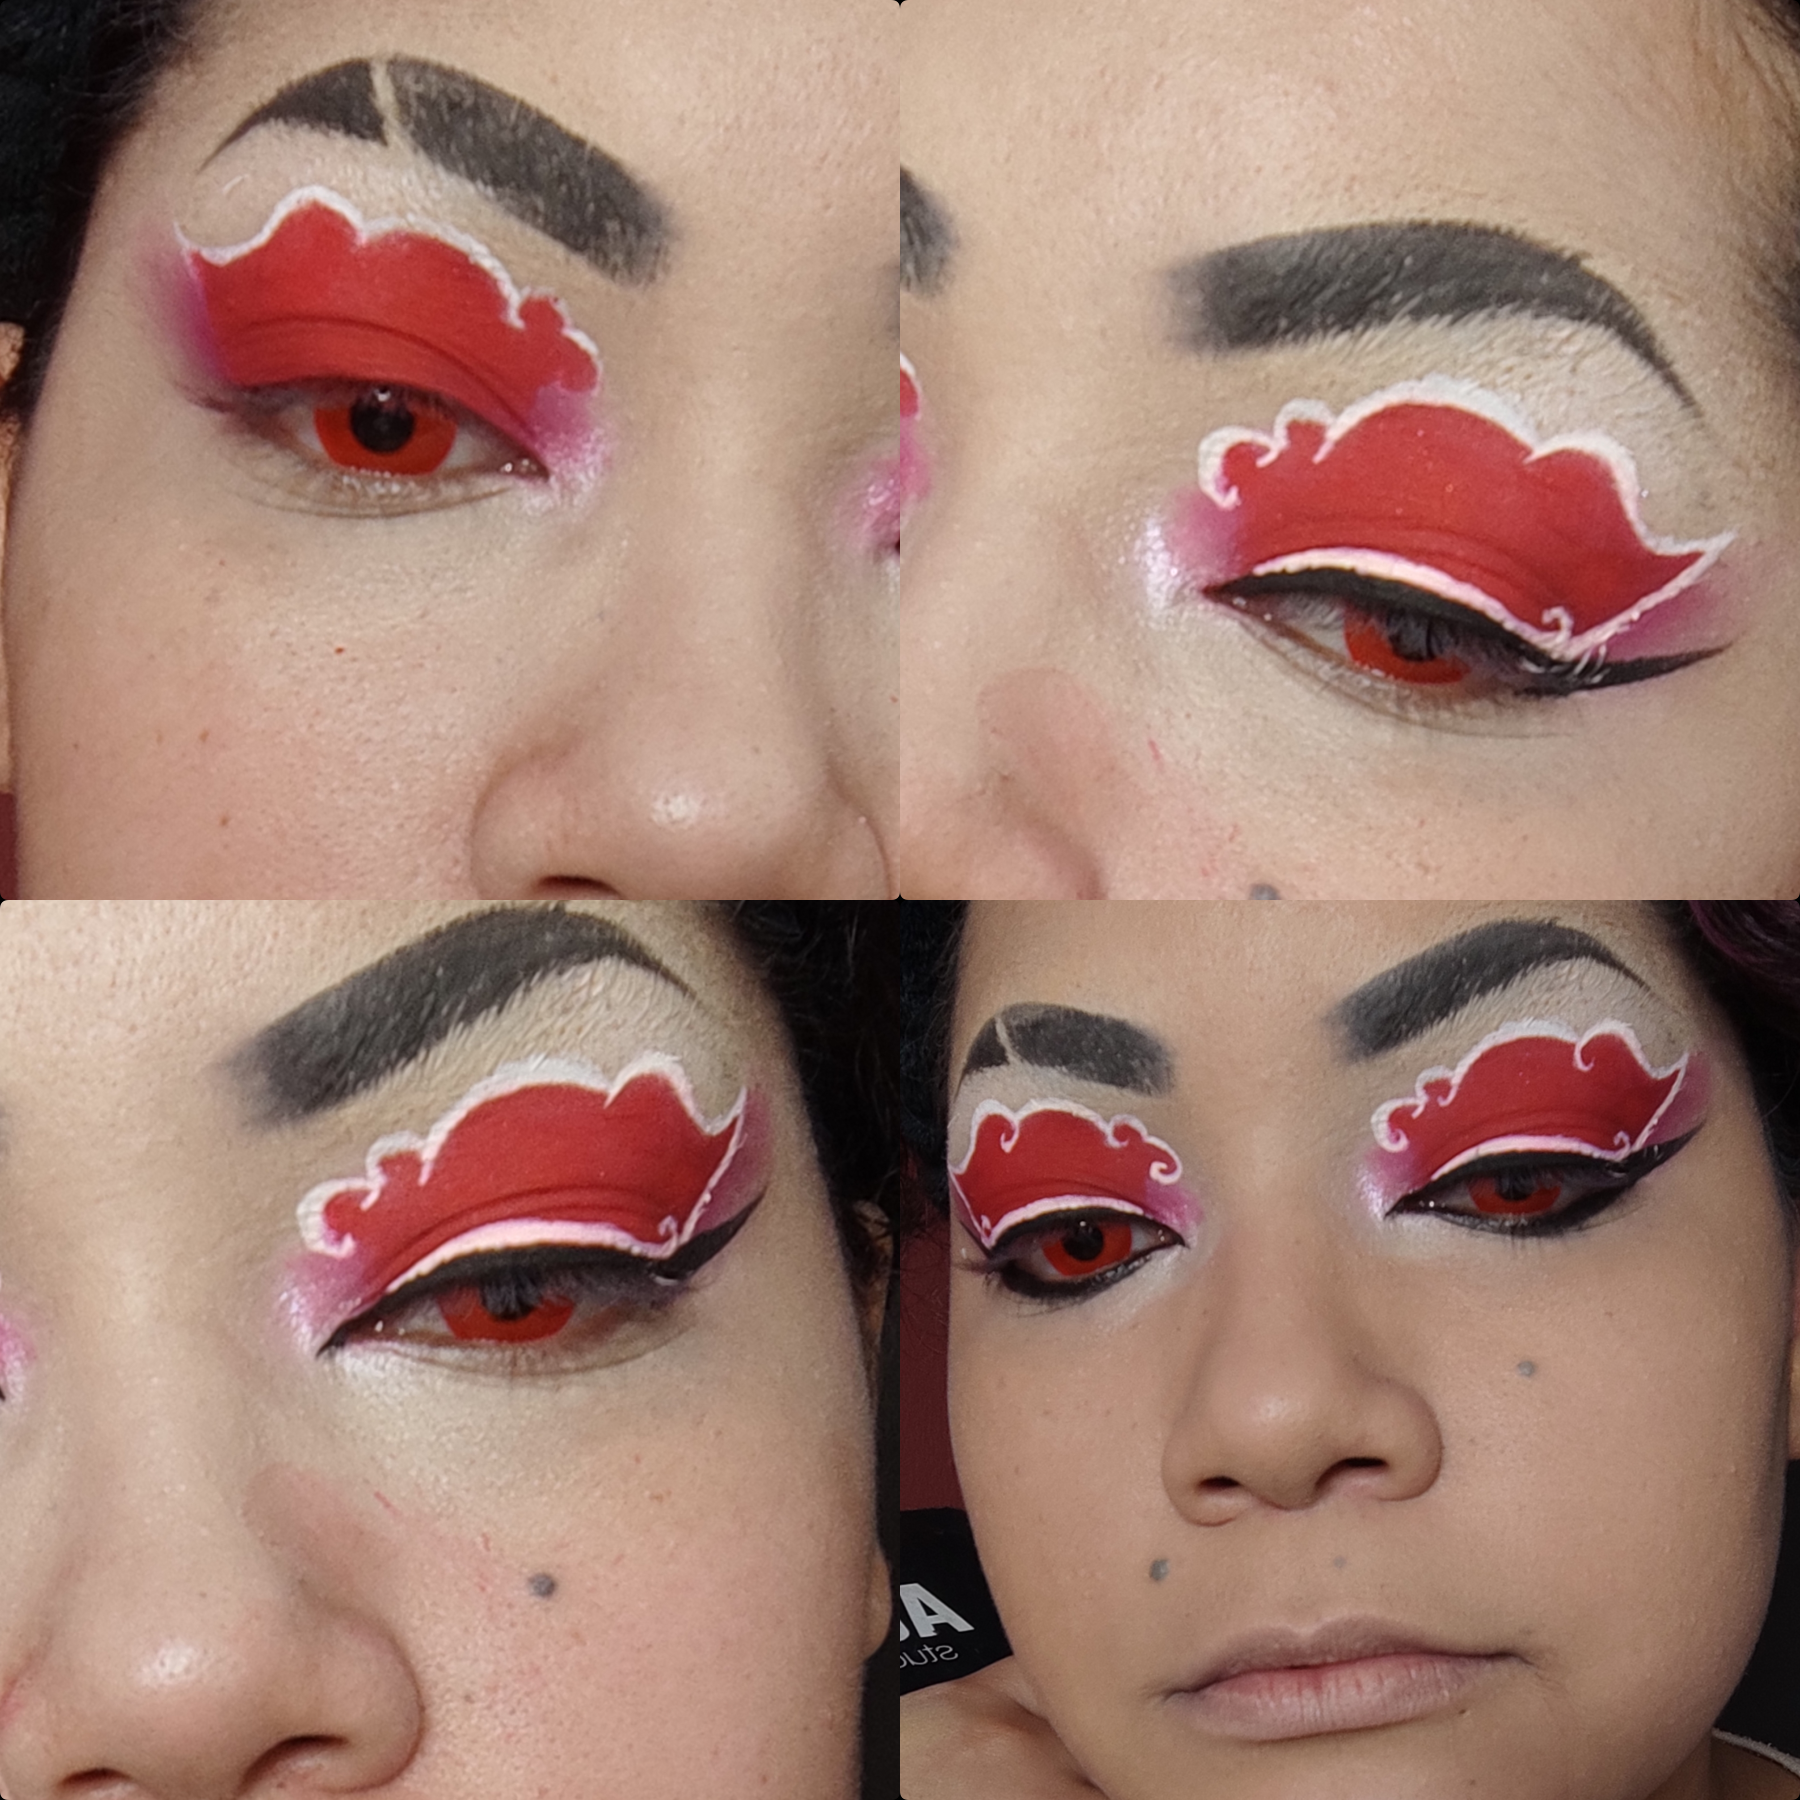 ☁️ ＡＫＡＴＳＵＫＩ ☁️ Inspired Makeup SandGy de Akatsuki al ataque xd ¿Cual es su  akatsuki favorito? 2/3 #makeup #makeupartist #maquillaje…